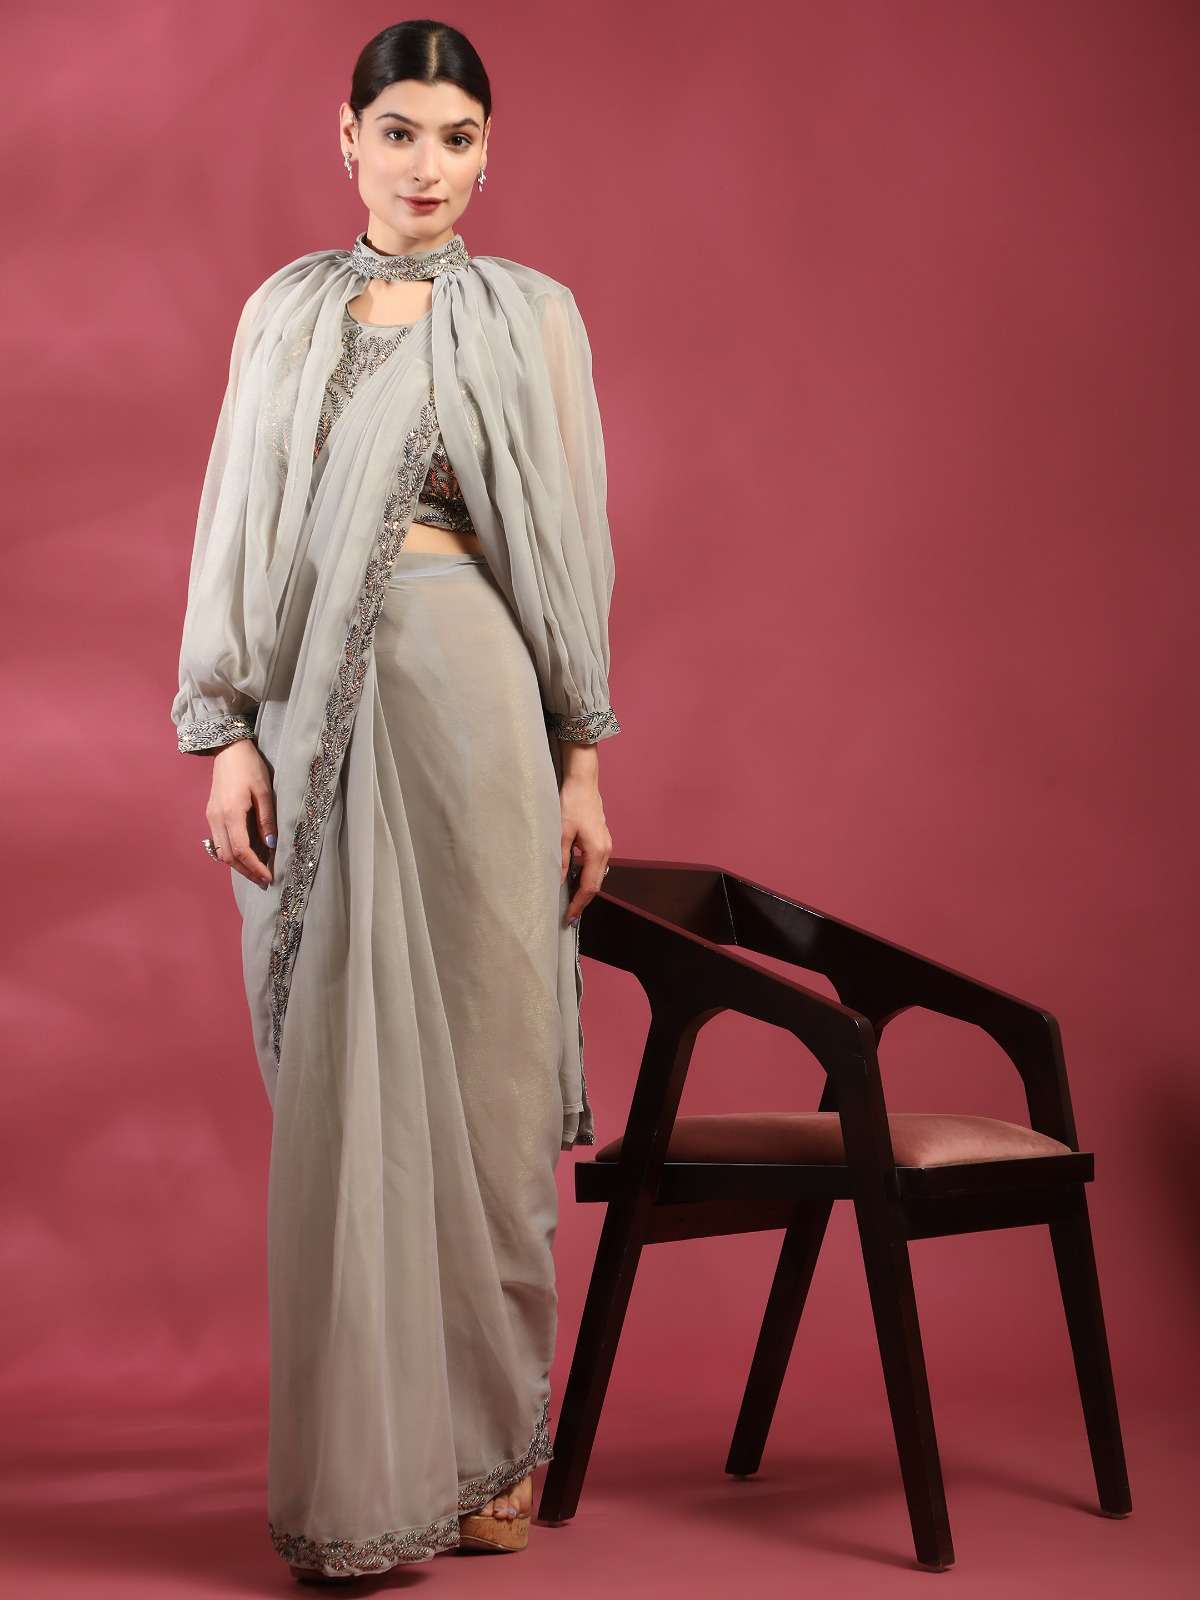 amoha trendz 246 colours designer latest ready to wear saree at wholesale price surat gujarat